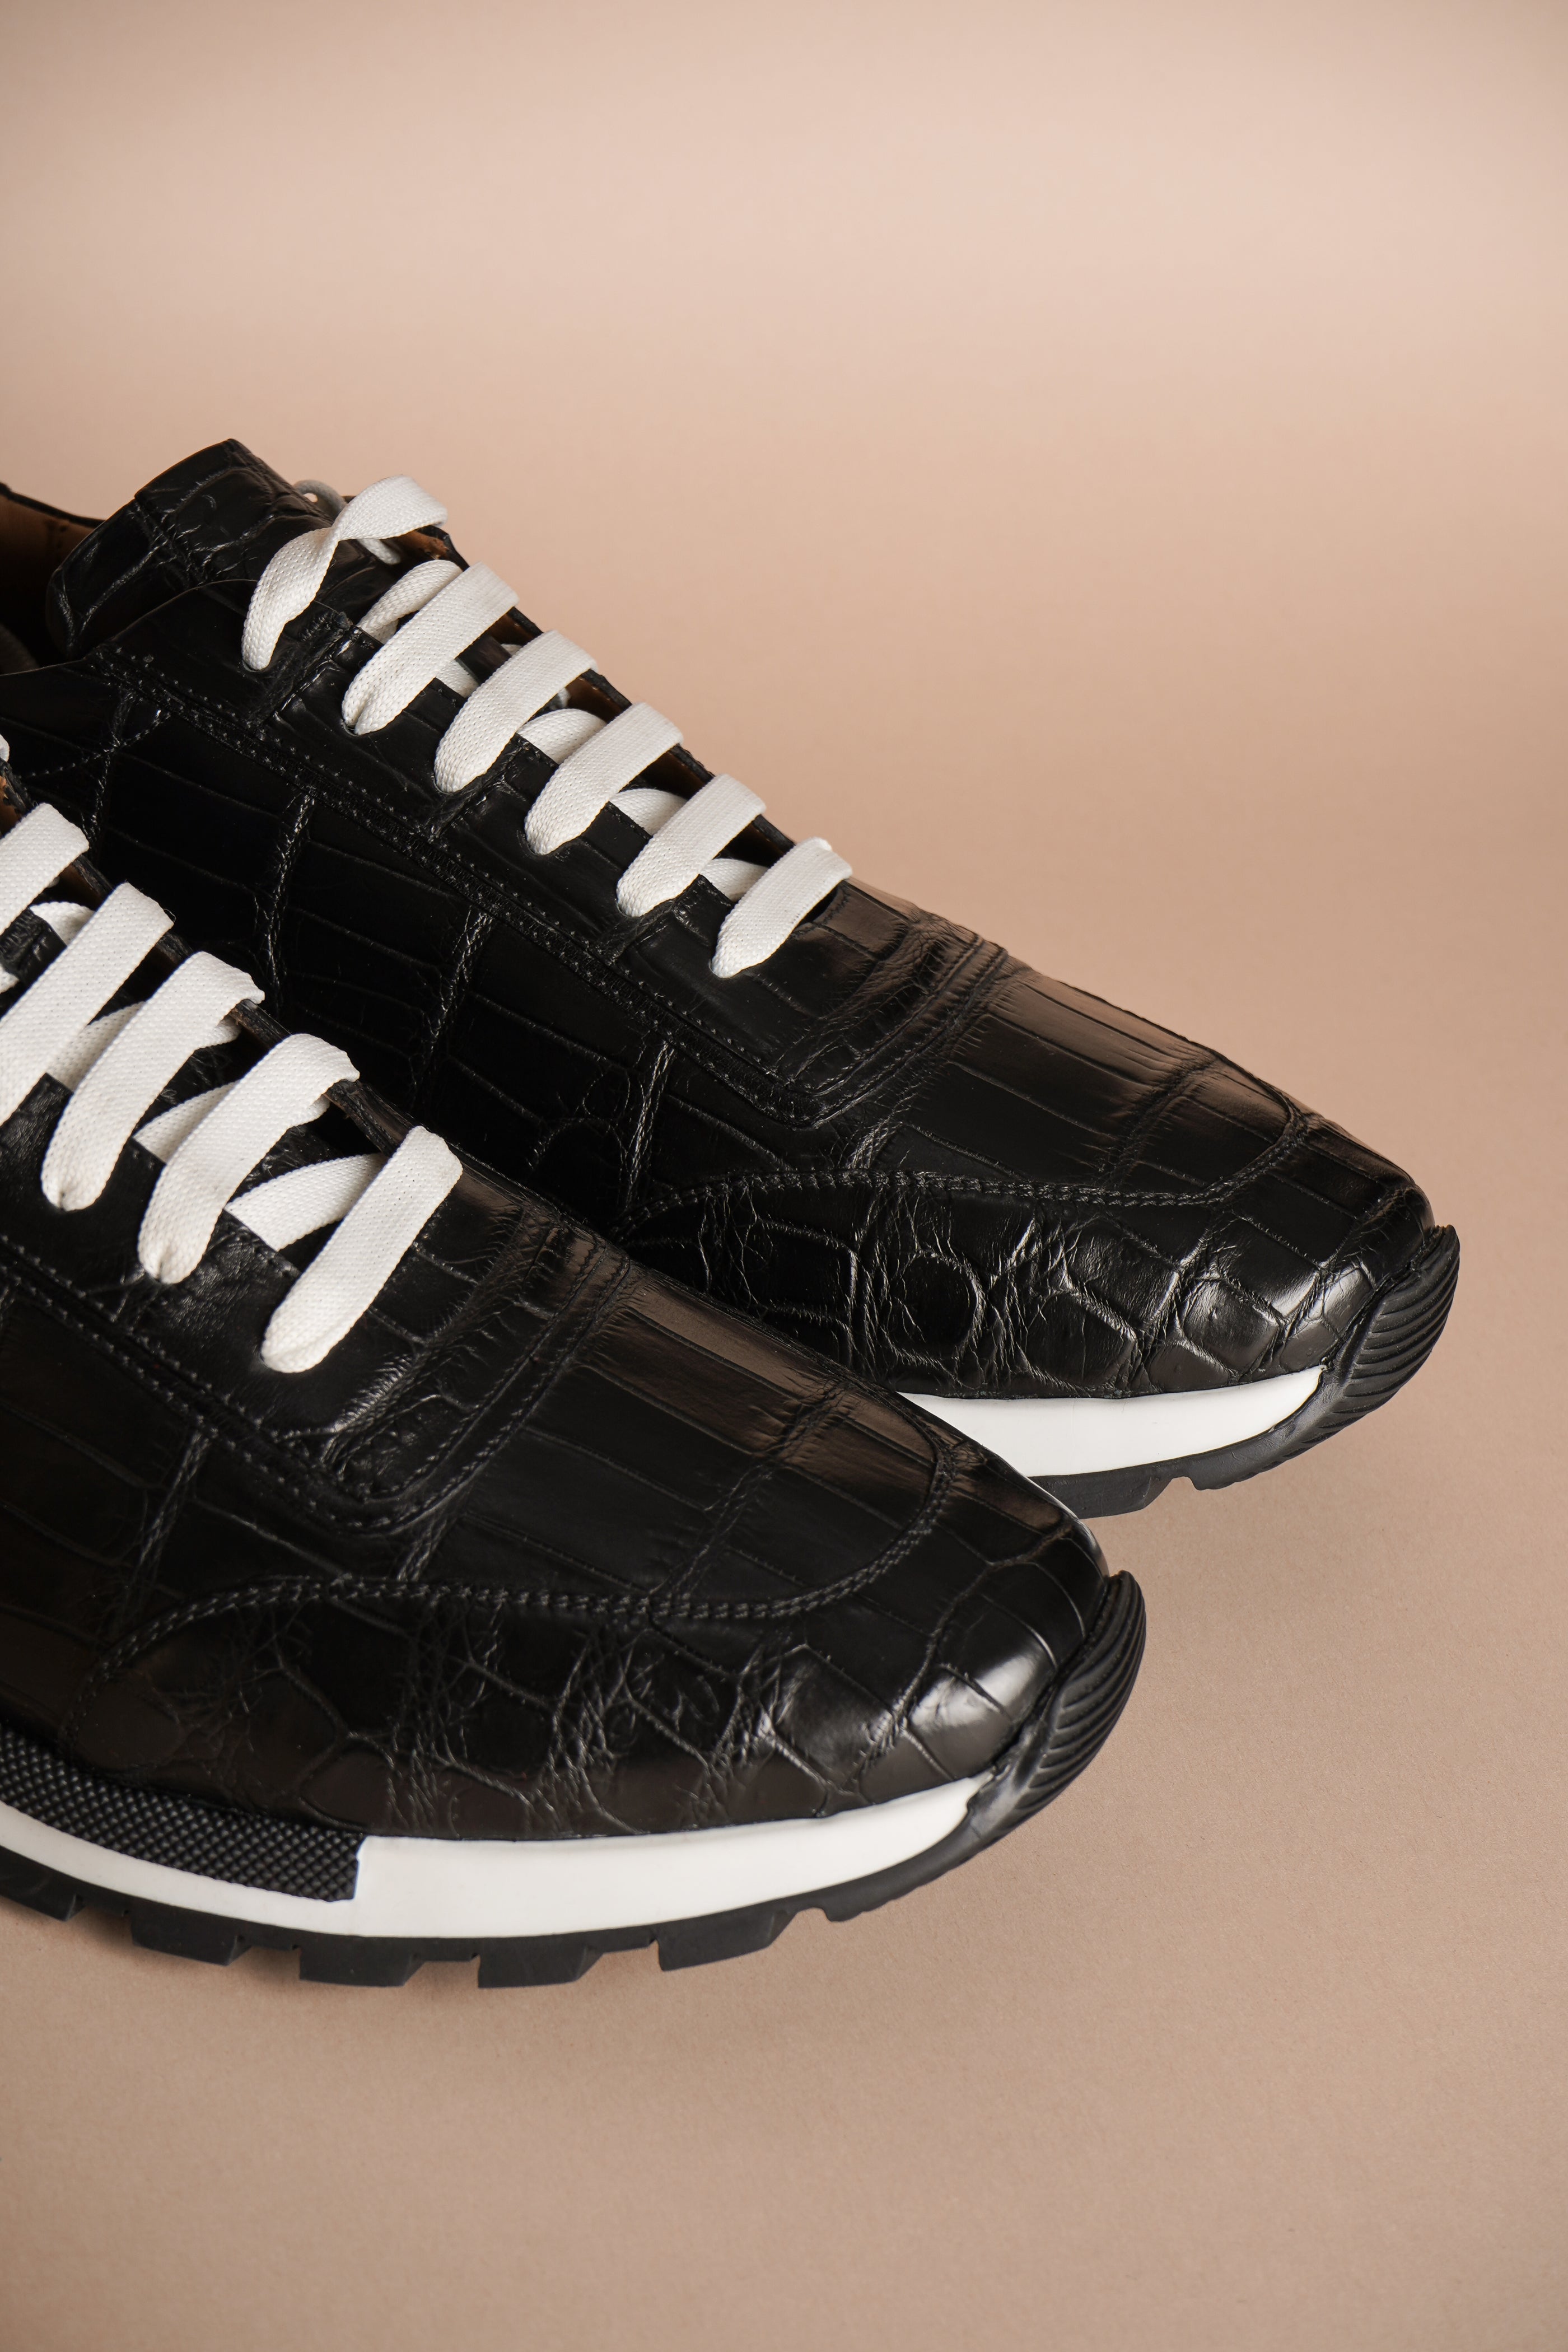 Balmoral Obsidian Elite Sneakers